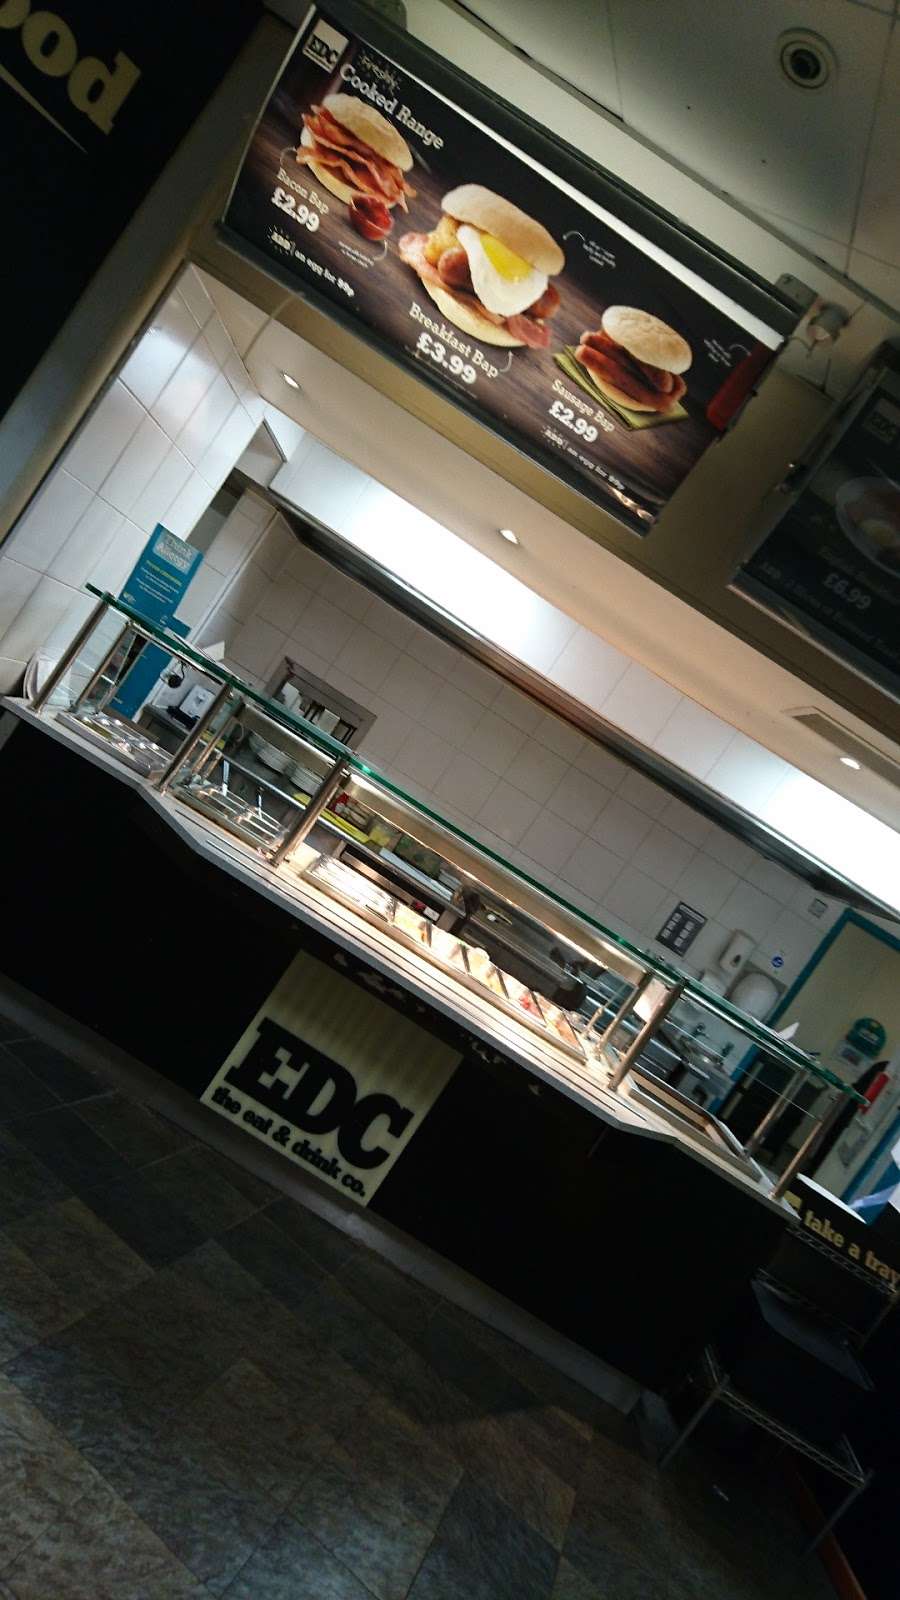 EDC the Eat & Drink Co. | Arterial Rd, West Thurrock, Grays RM16 3BG, UK | Phone: 07736 090503